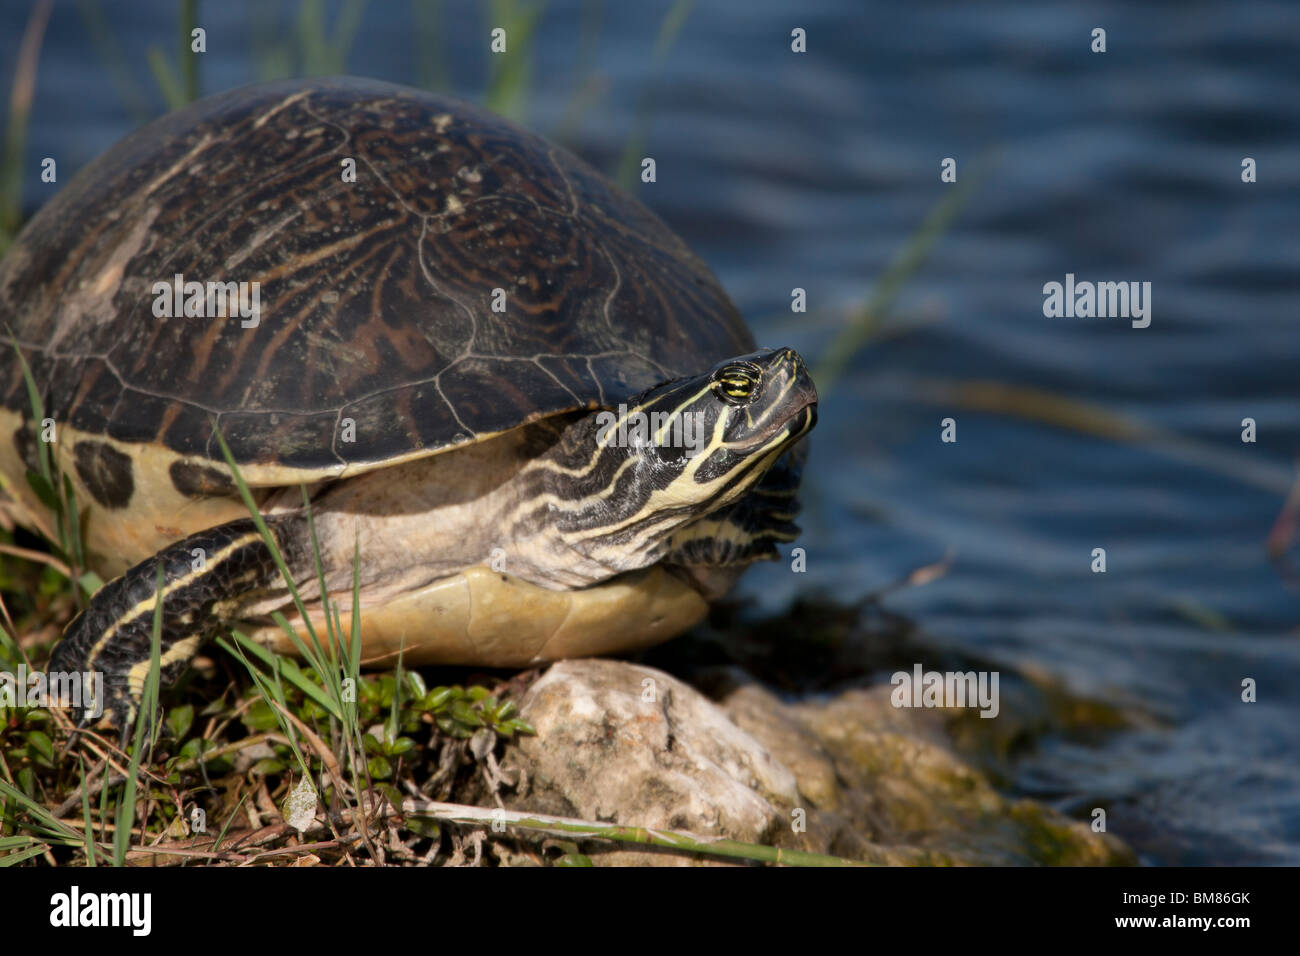 Florida Redbelly Turtle (Pseudemys nelsoni) Stock Photo